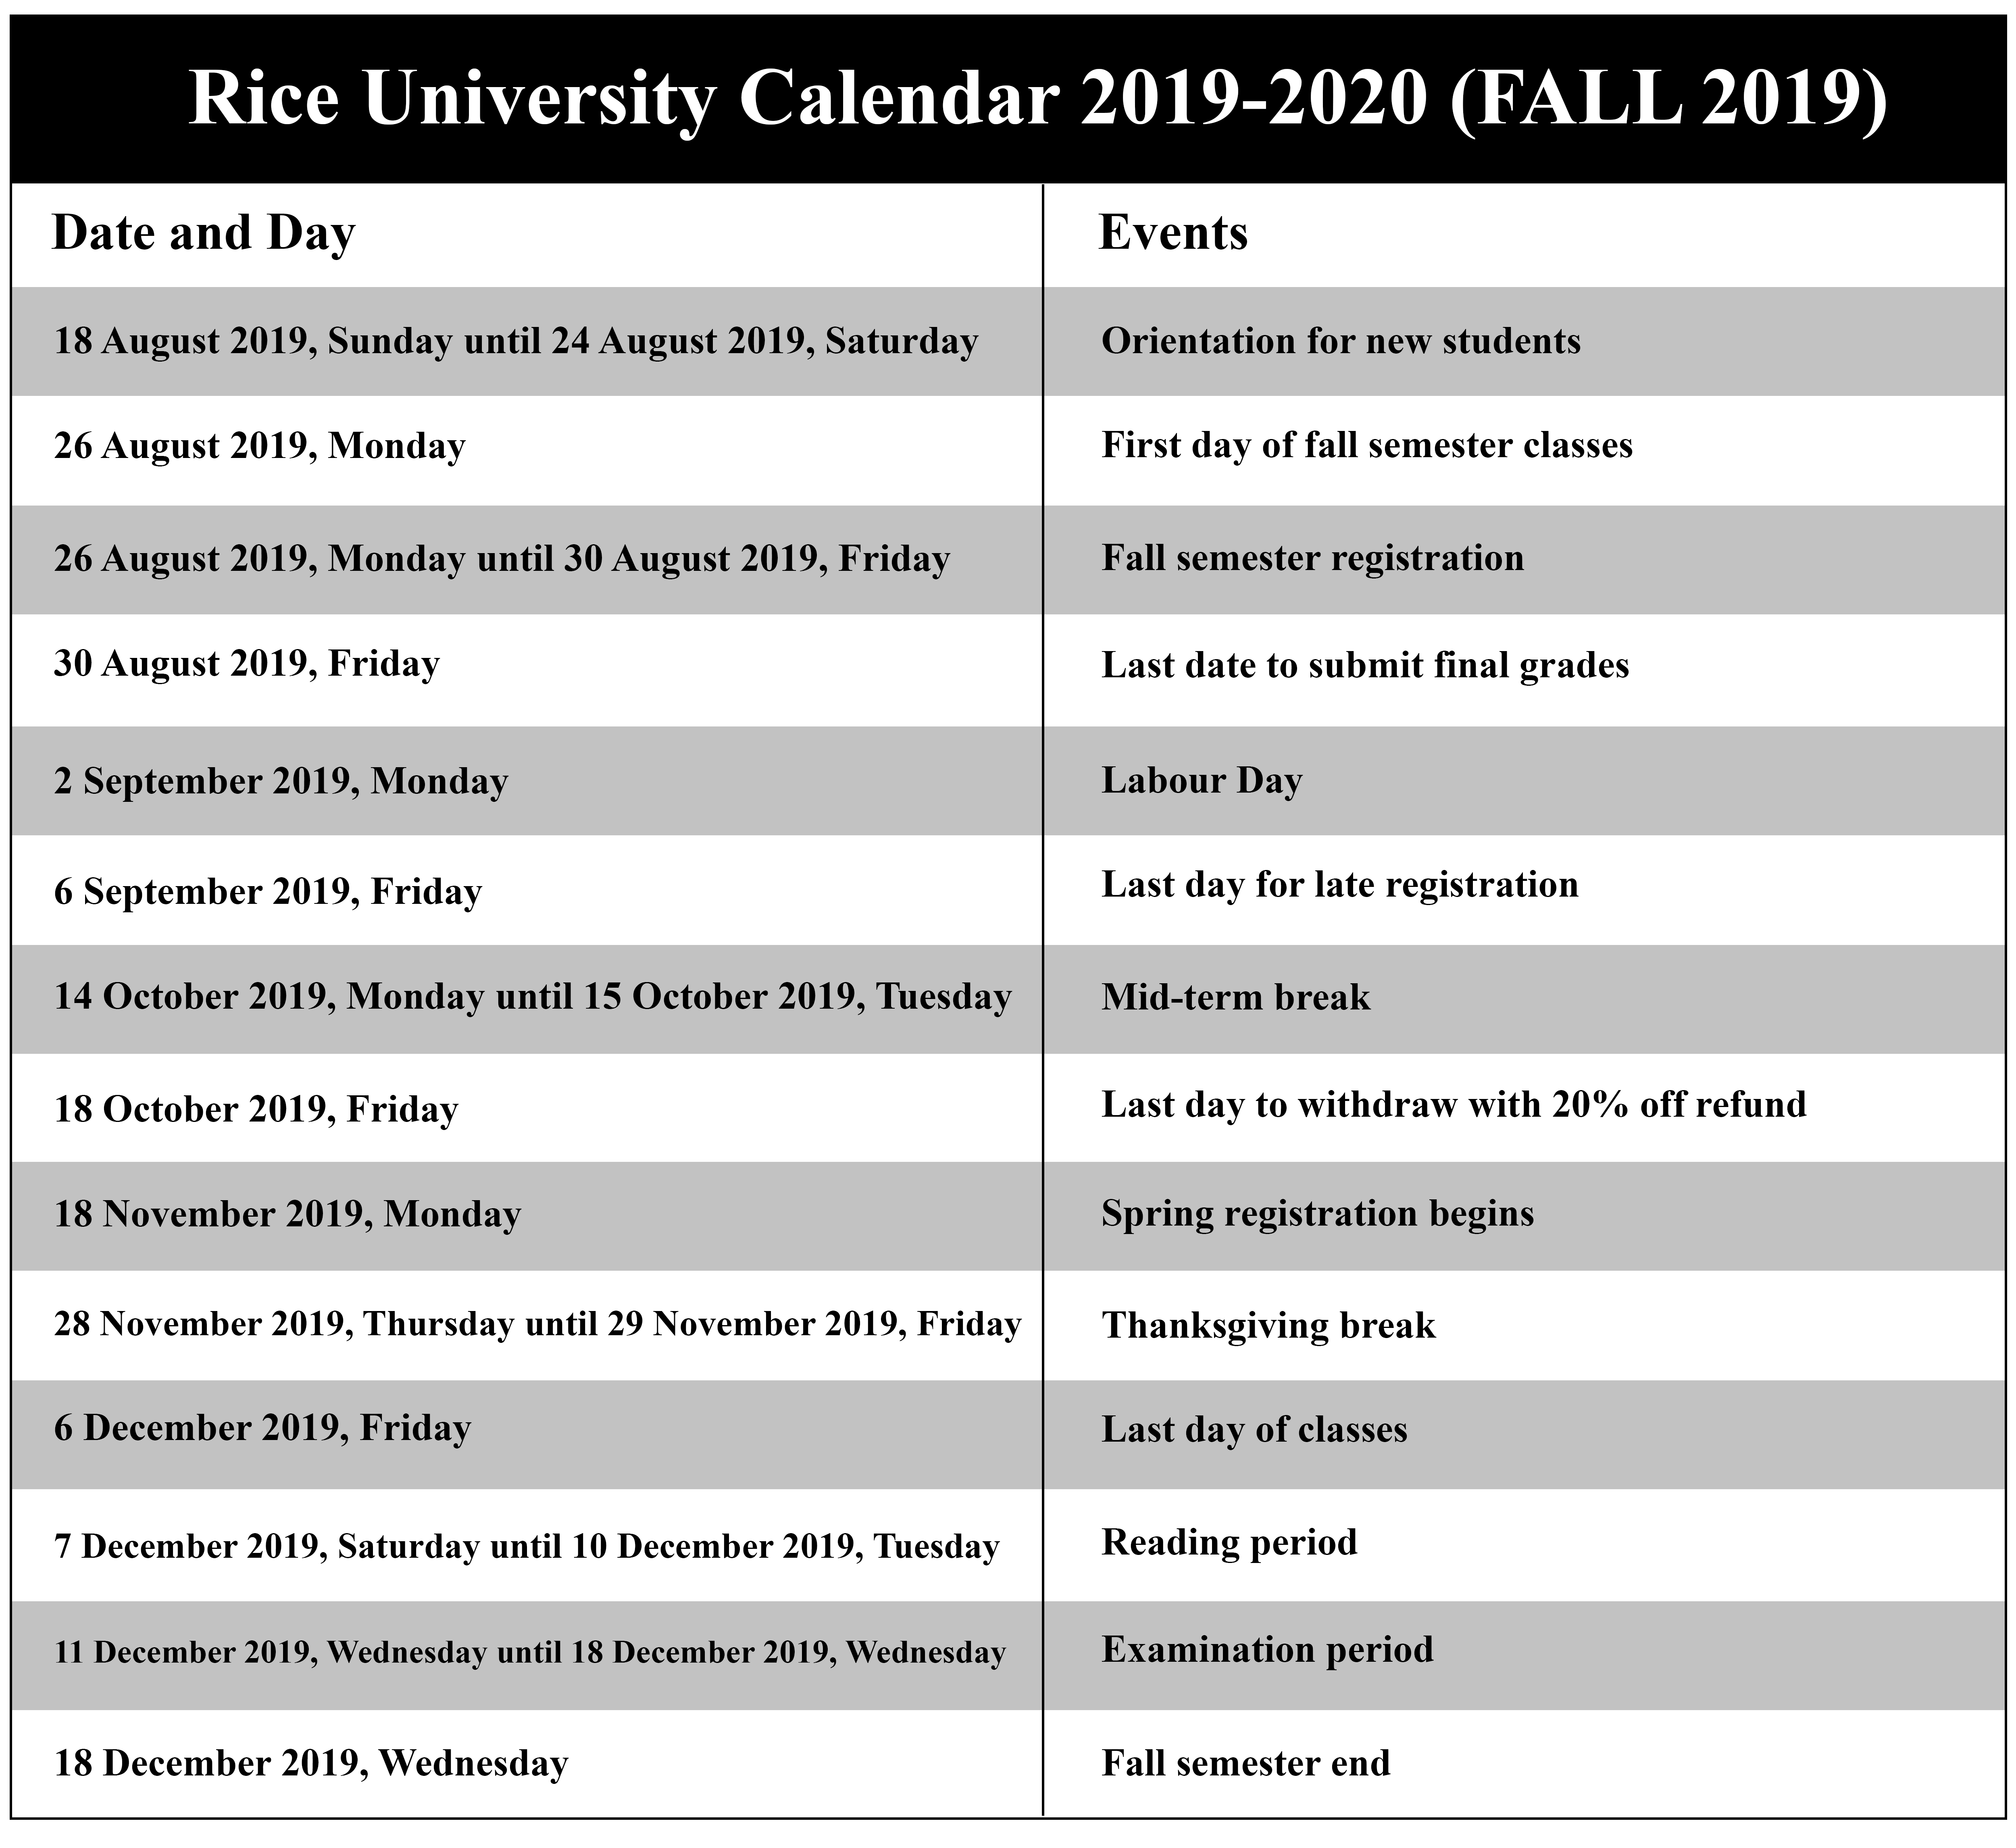 rice university calendar fall 2021 Rice University Calendar 2019 2020 Fall 2019 rice university calendar fall 2021